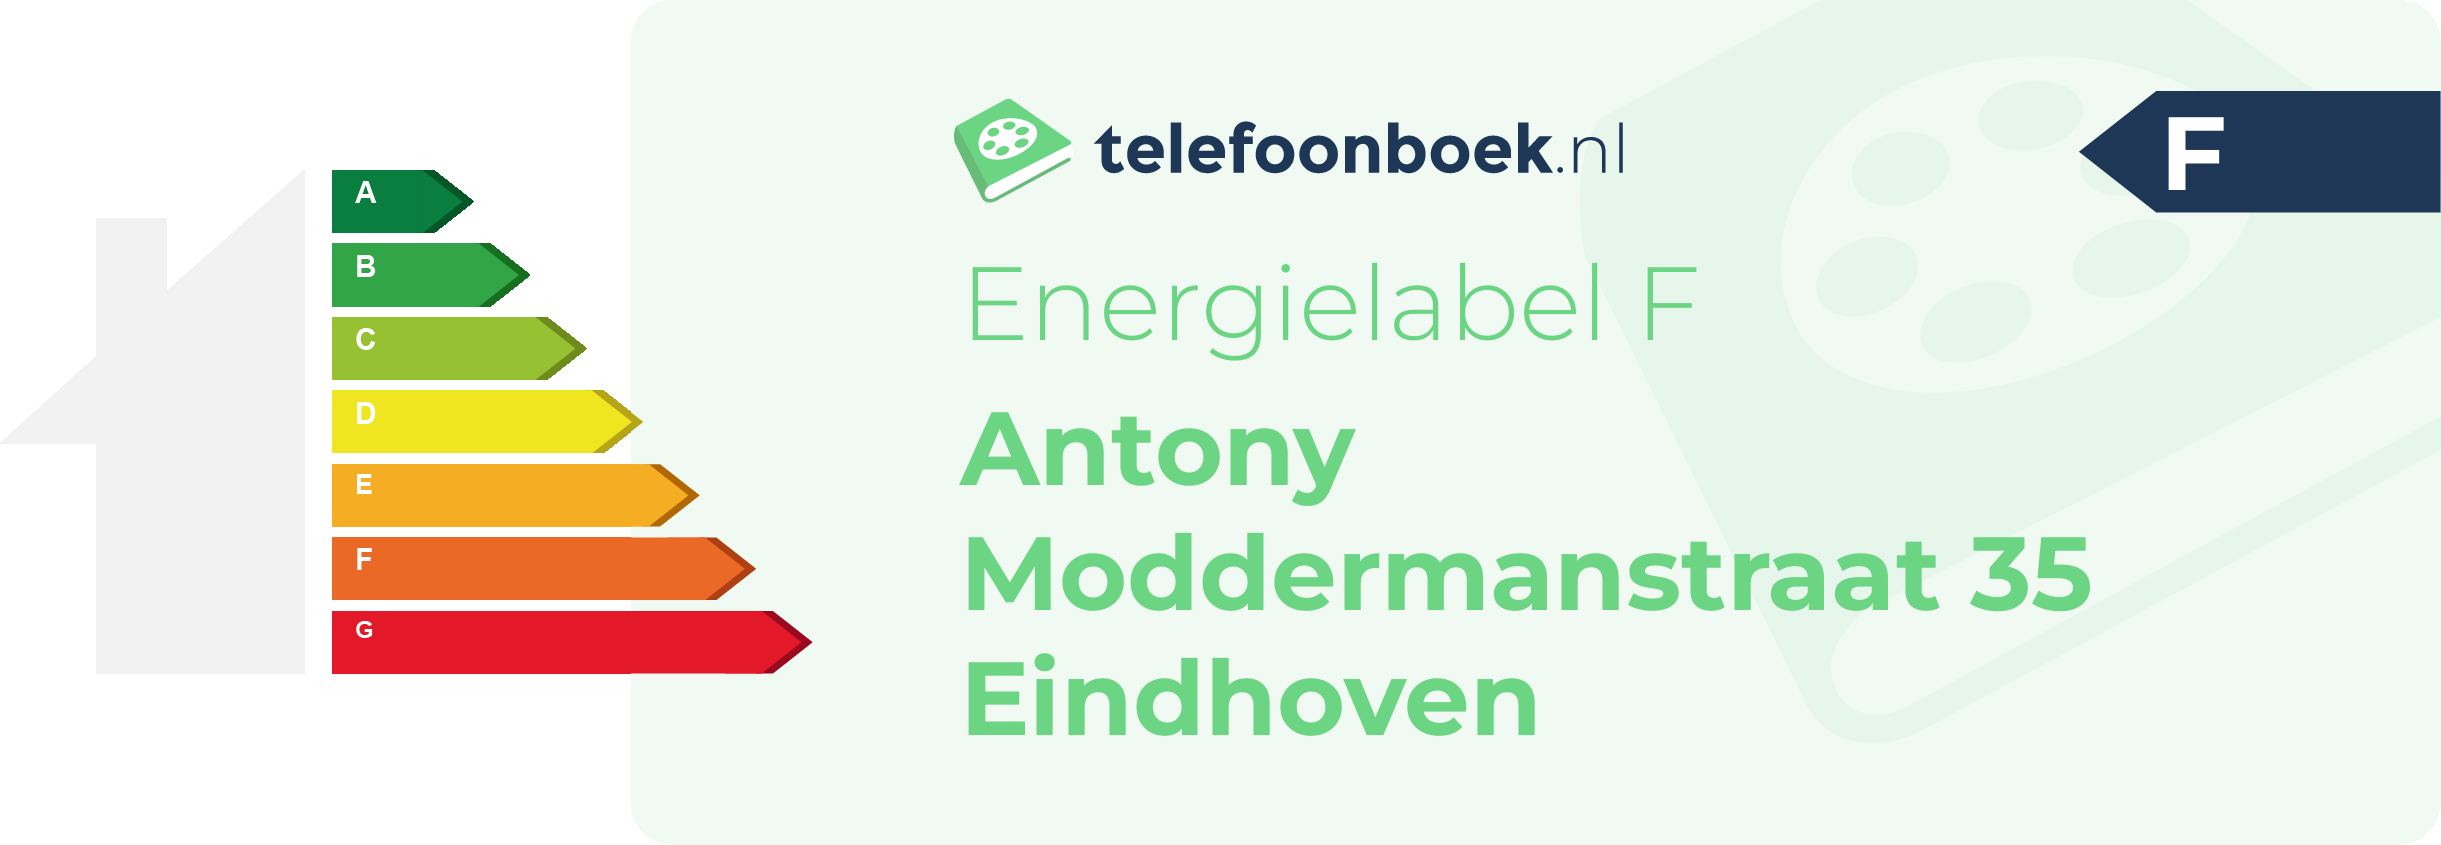 Energielabel Antony Moddermanstraat 35 Eindhoven